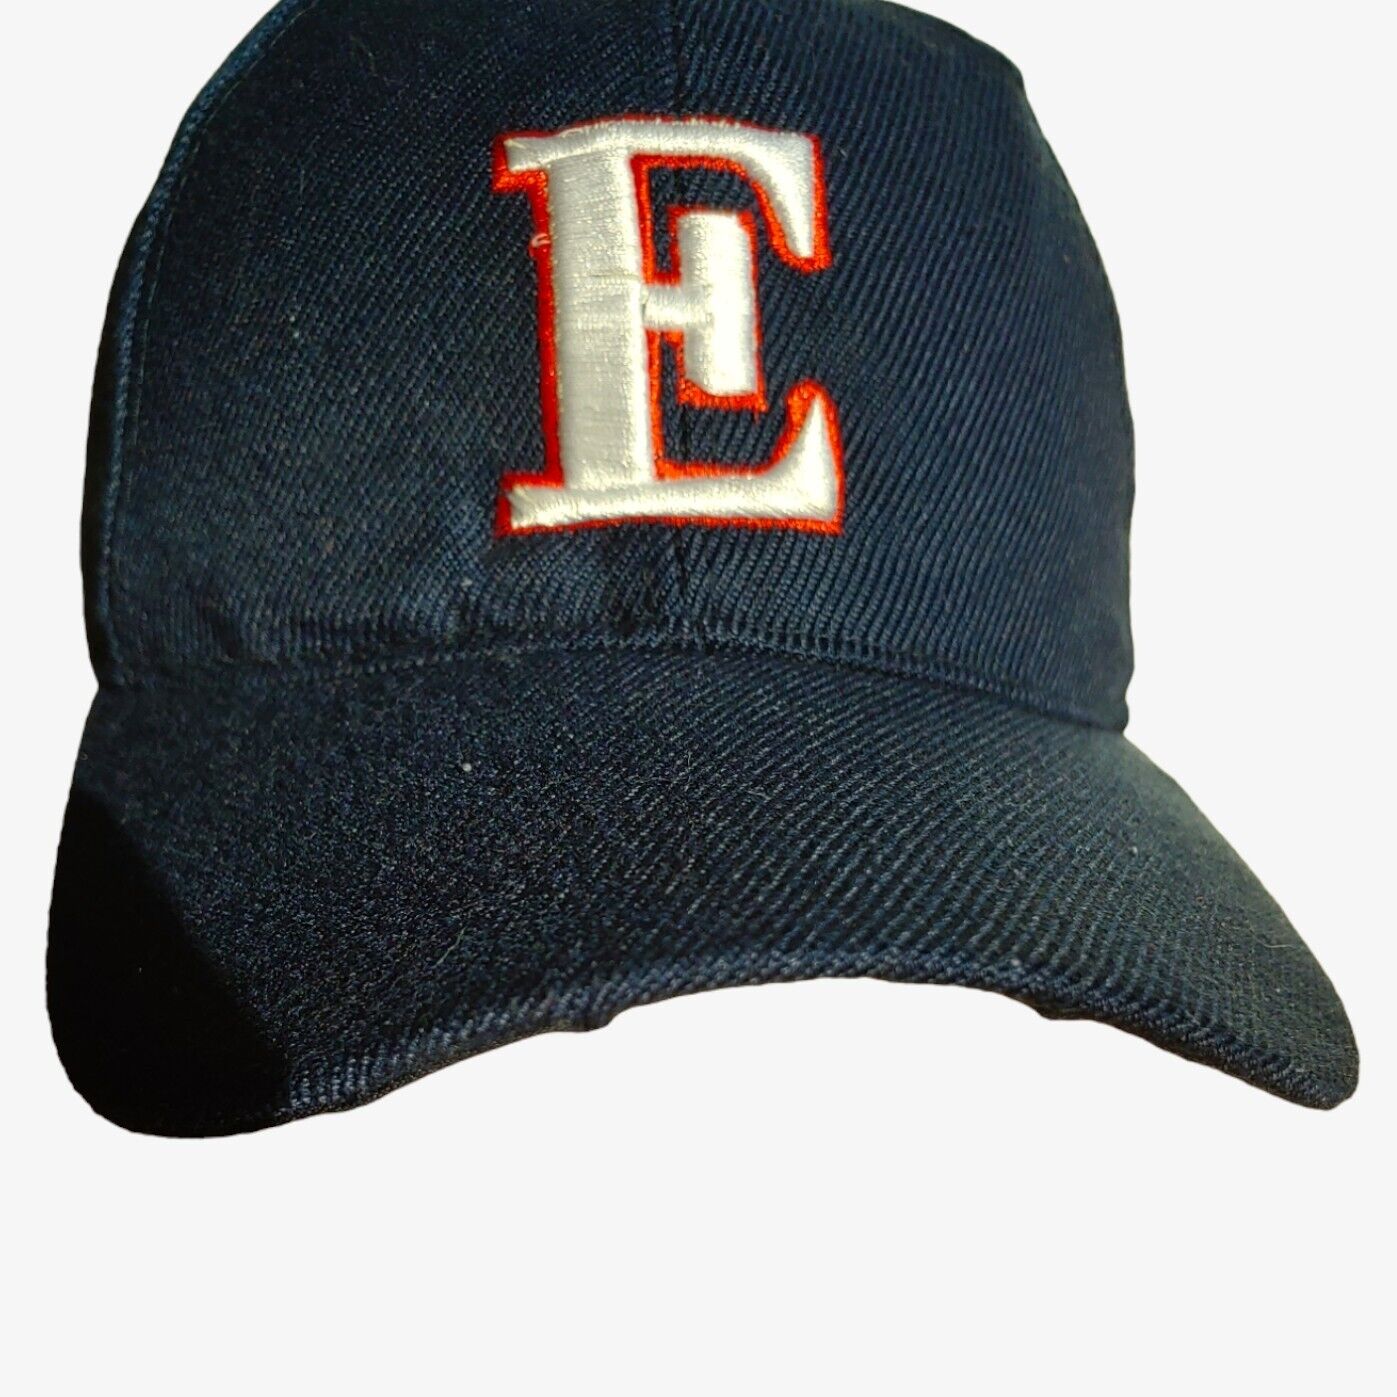 Vintage 1990s E Embroidered Baseball Cap Wear - Casspios Dream